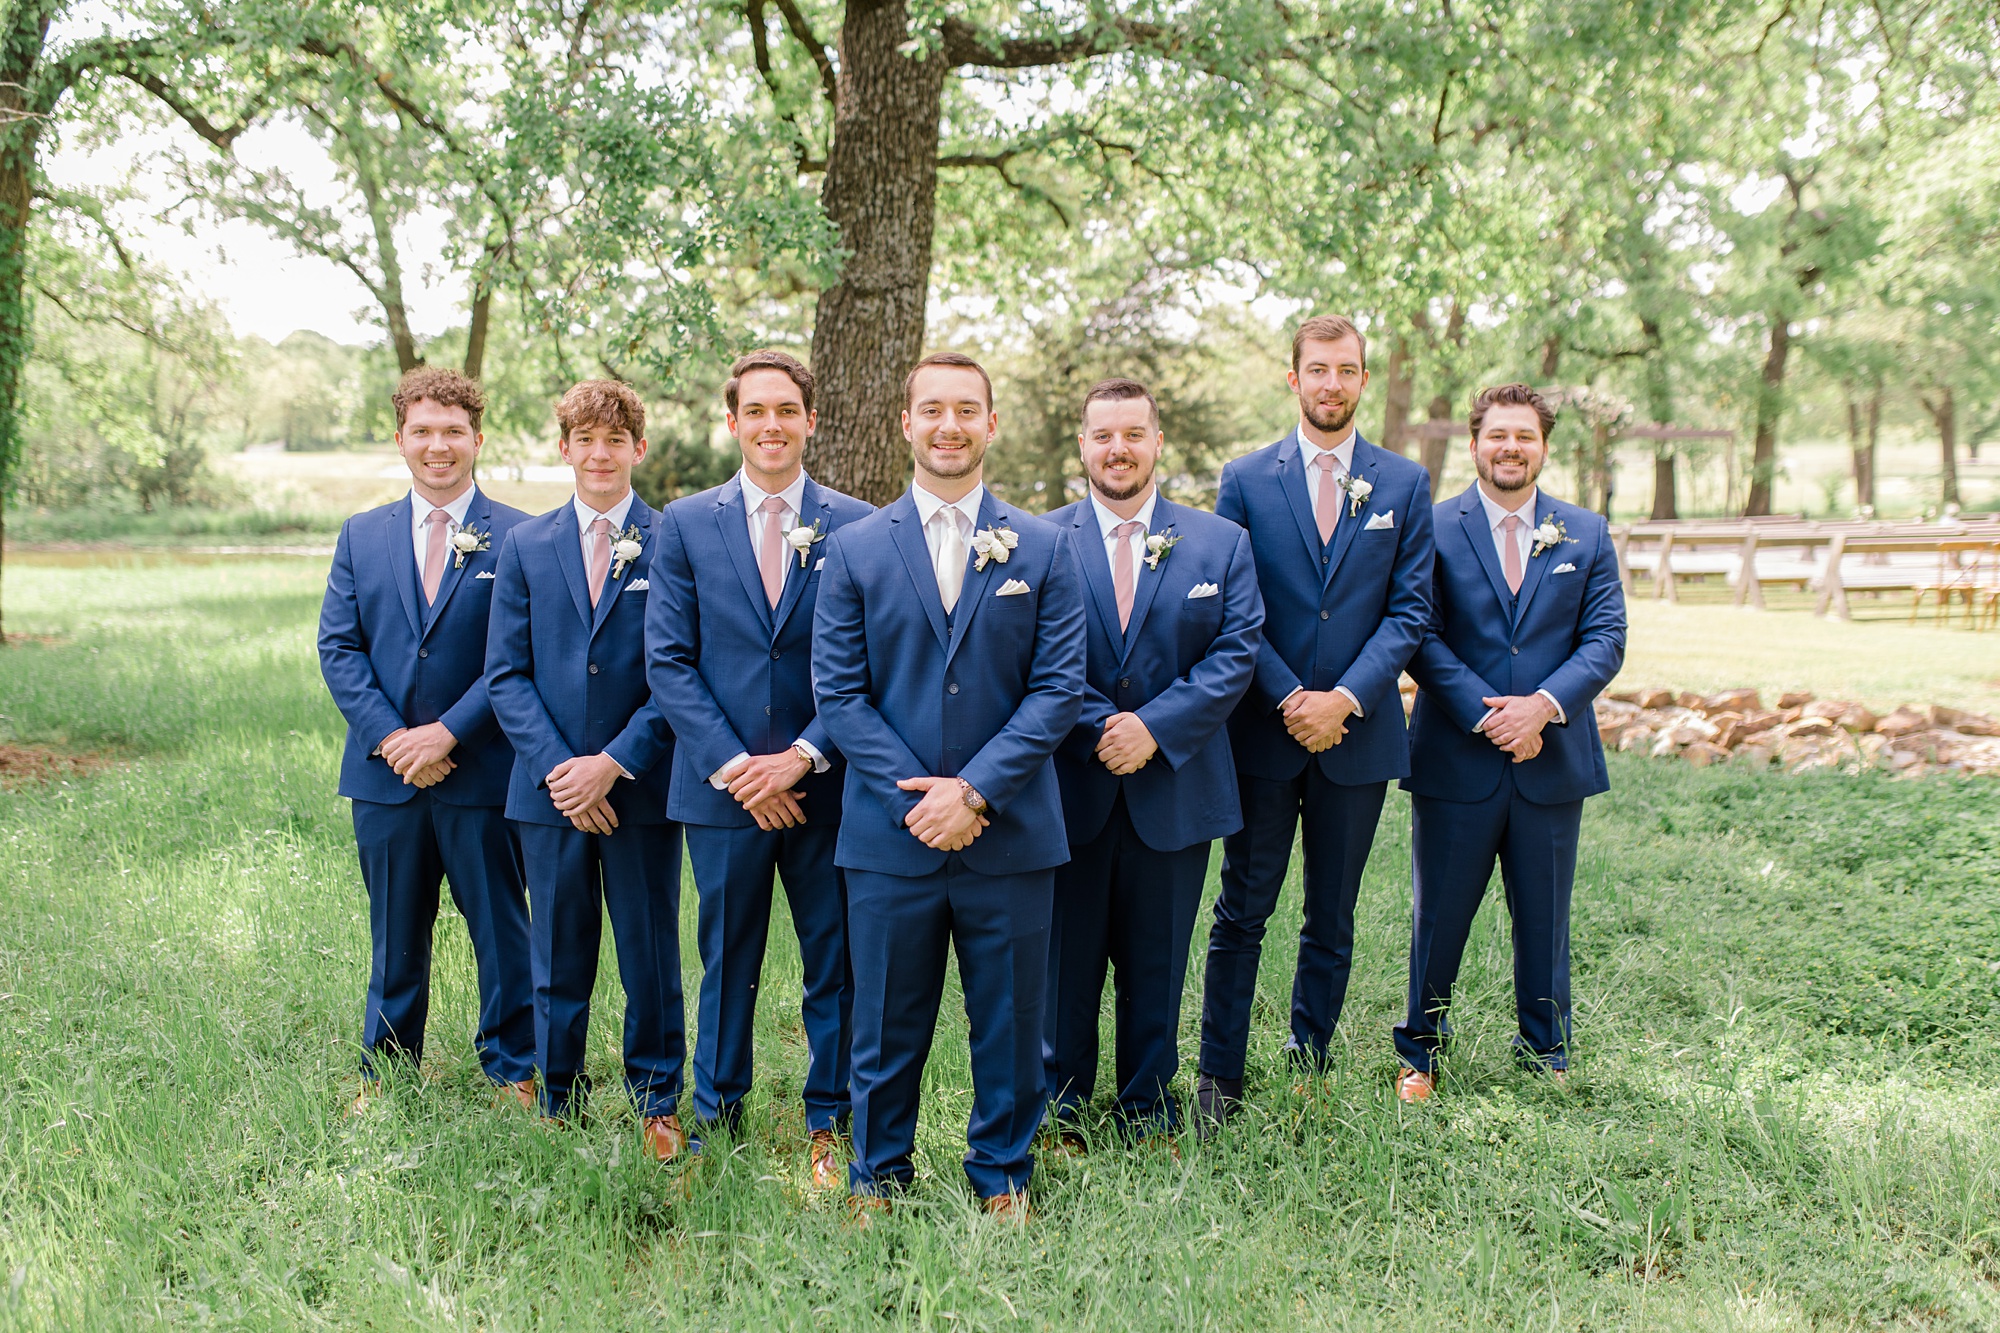 groomsmen in navy suits pose with groom